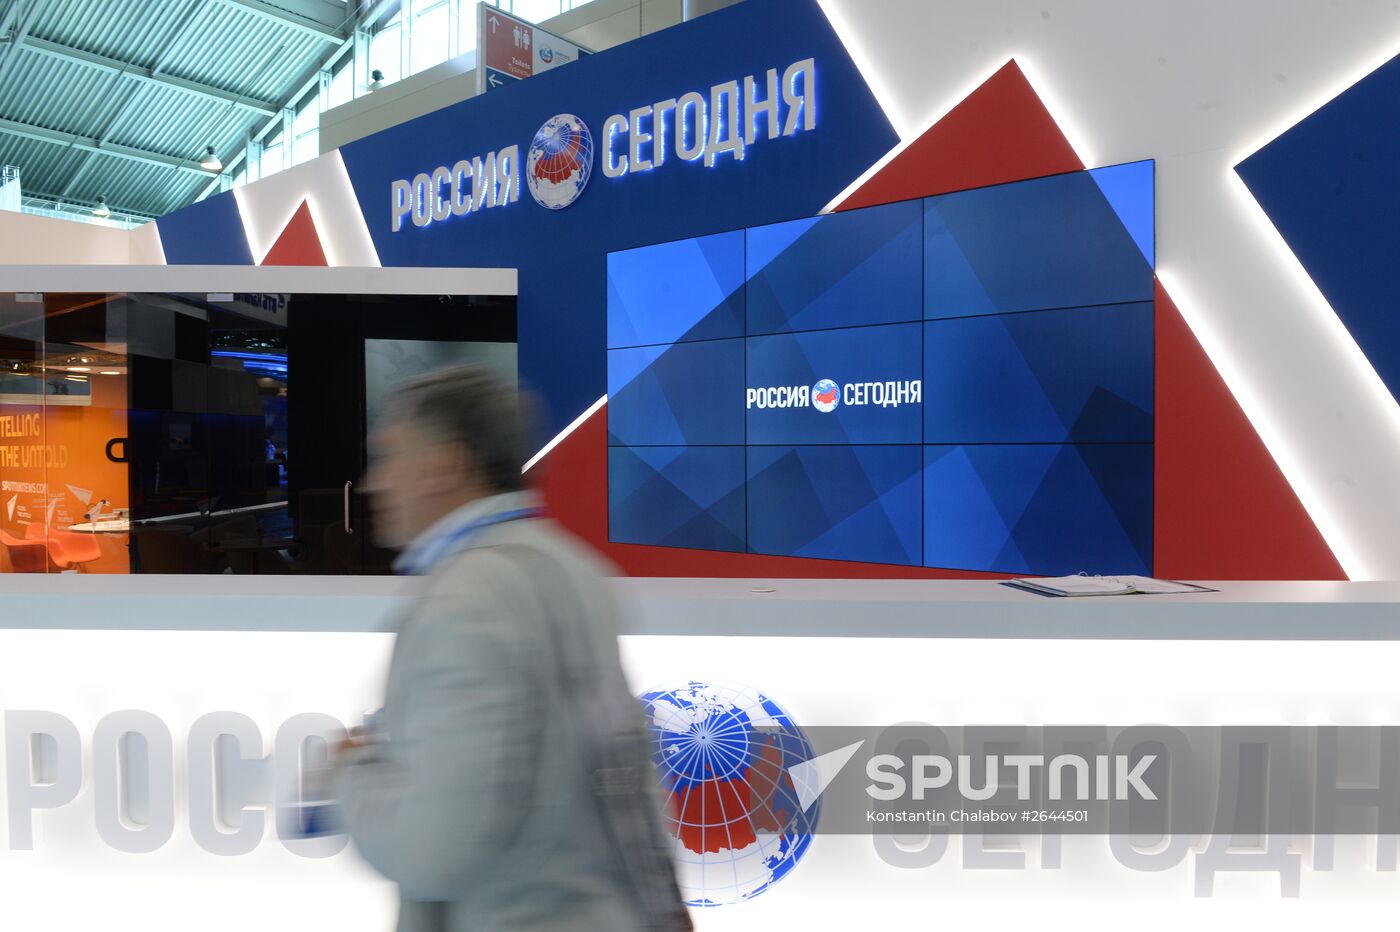 Preparations for 2015 St. Petersburg International Economic Forum